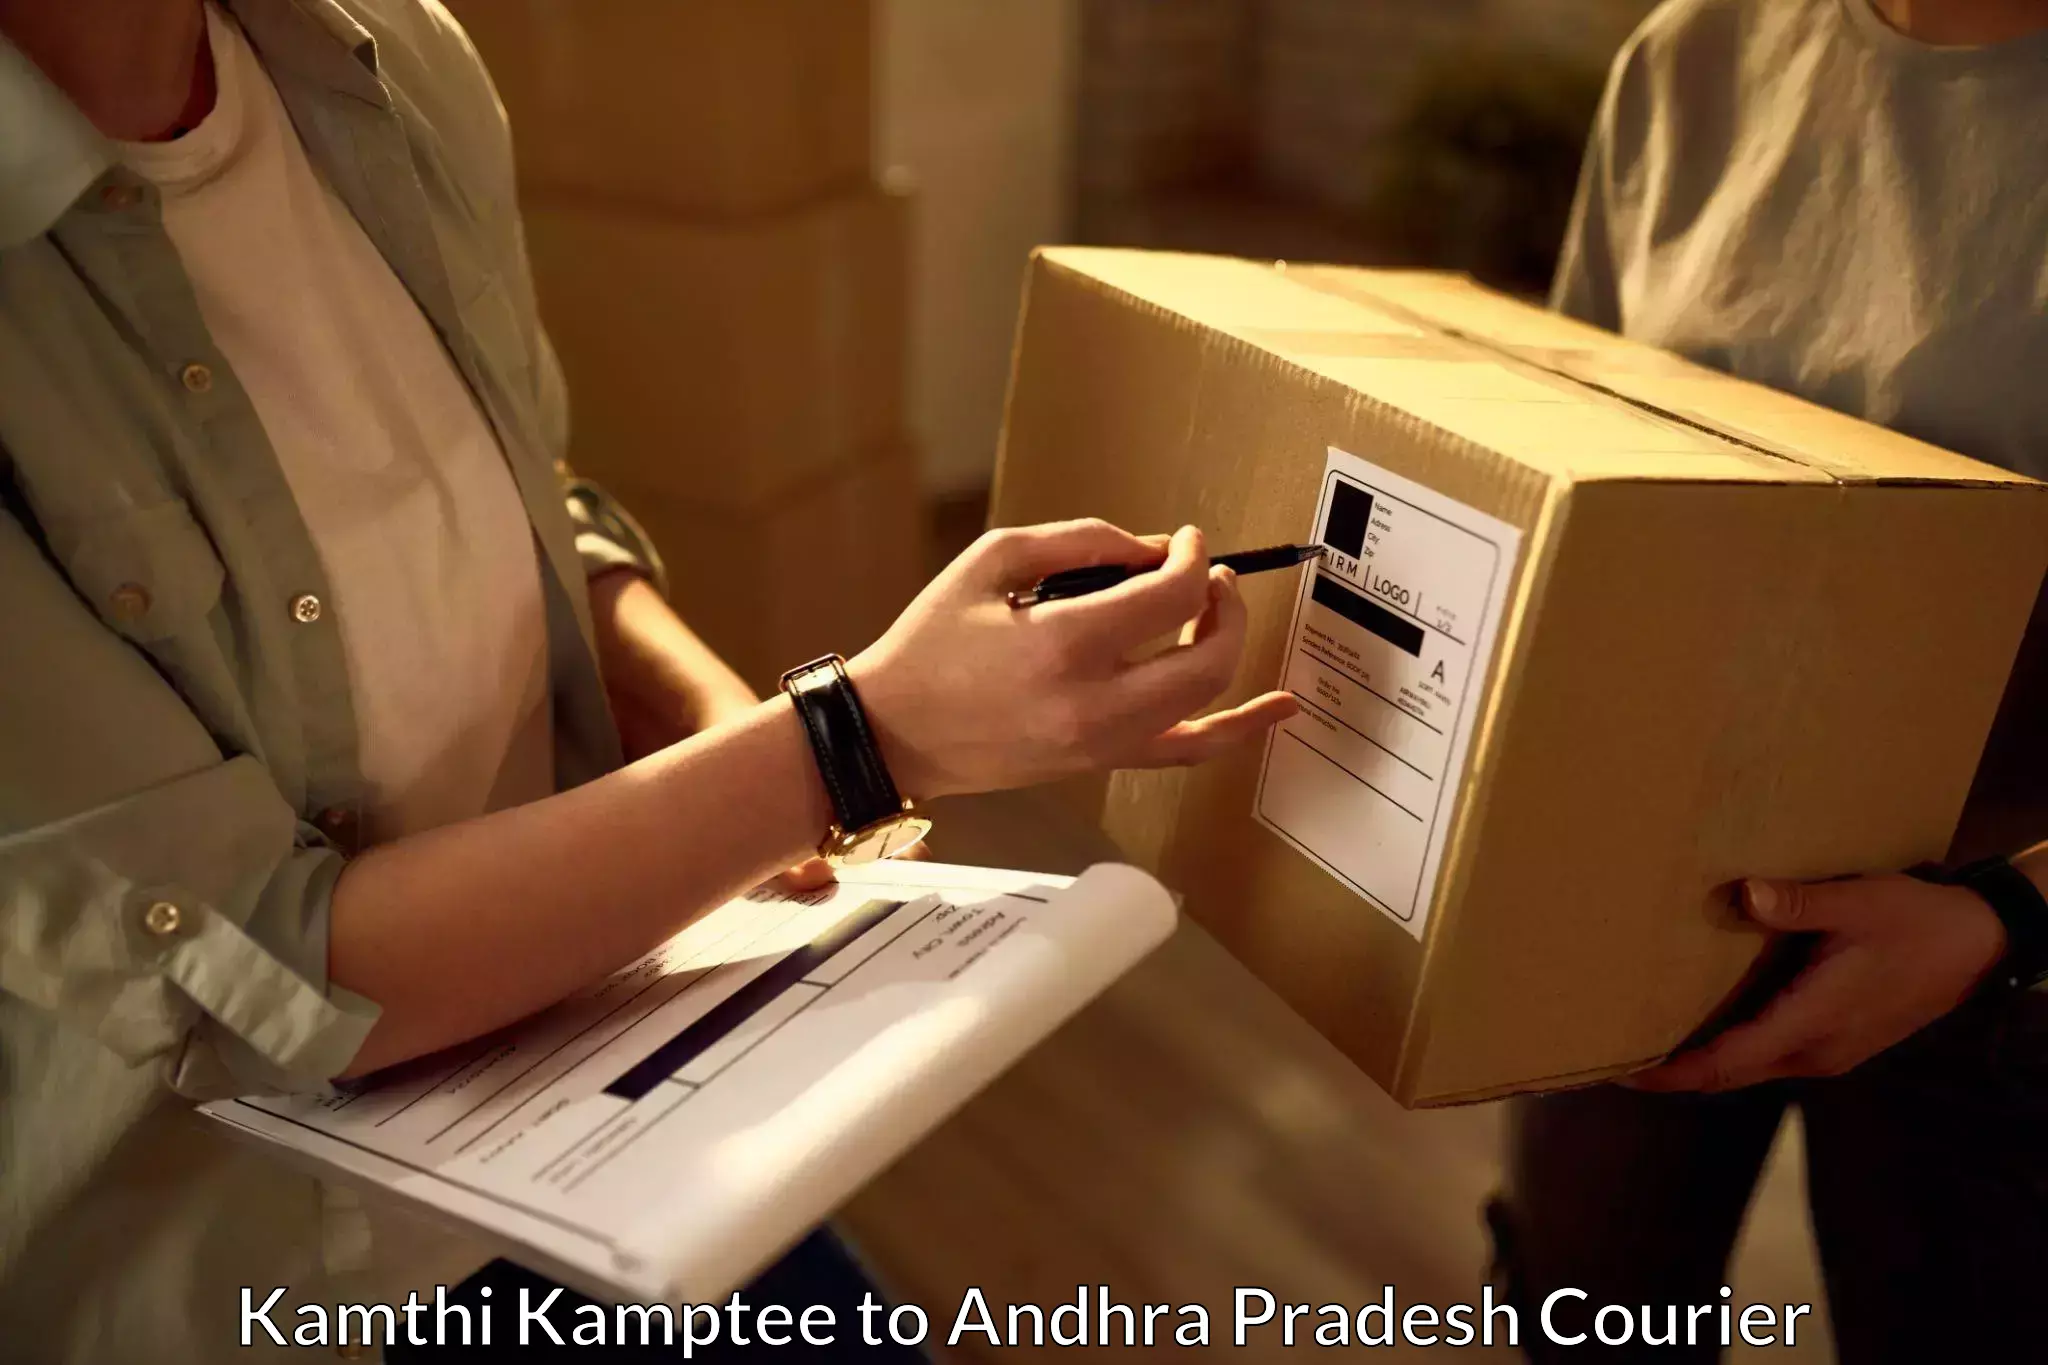 Courier service comparison Kamthi Kamptee to Konthamuru